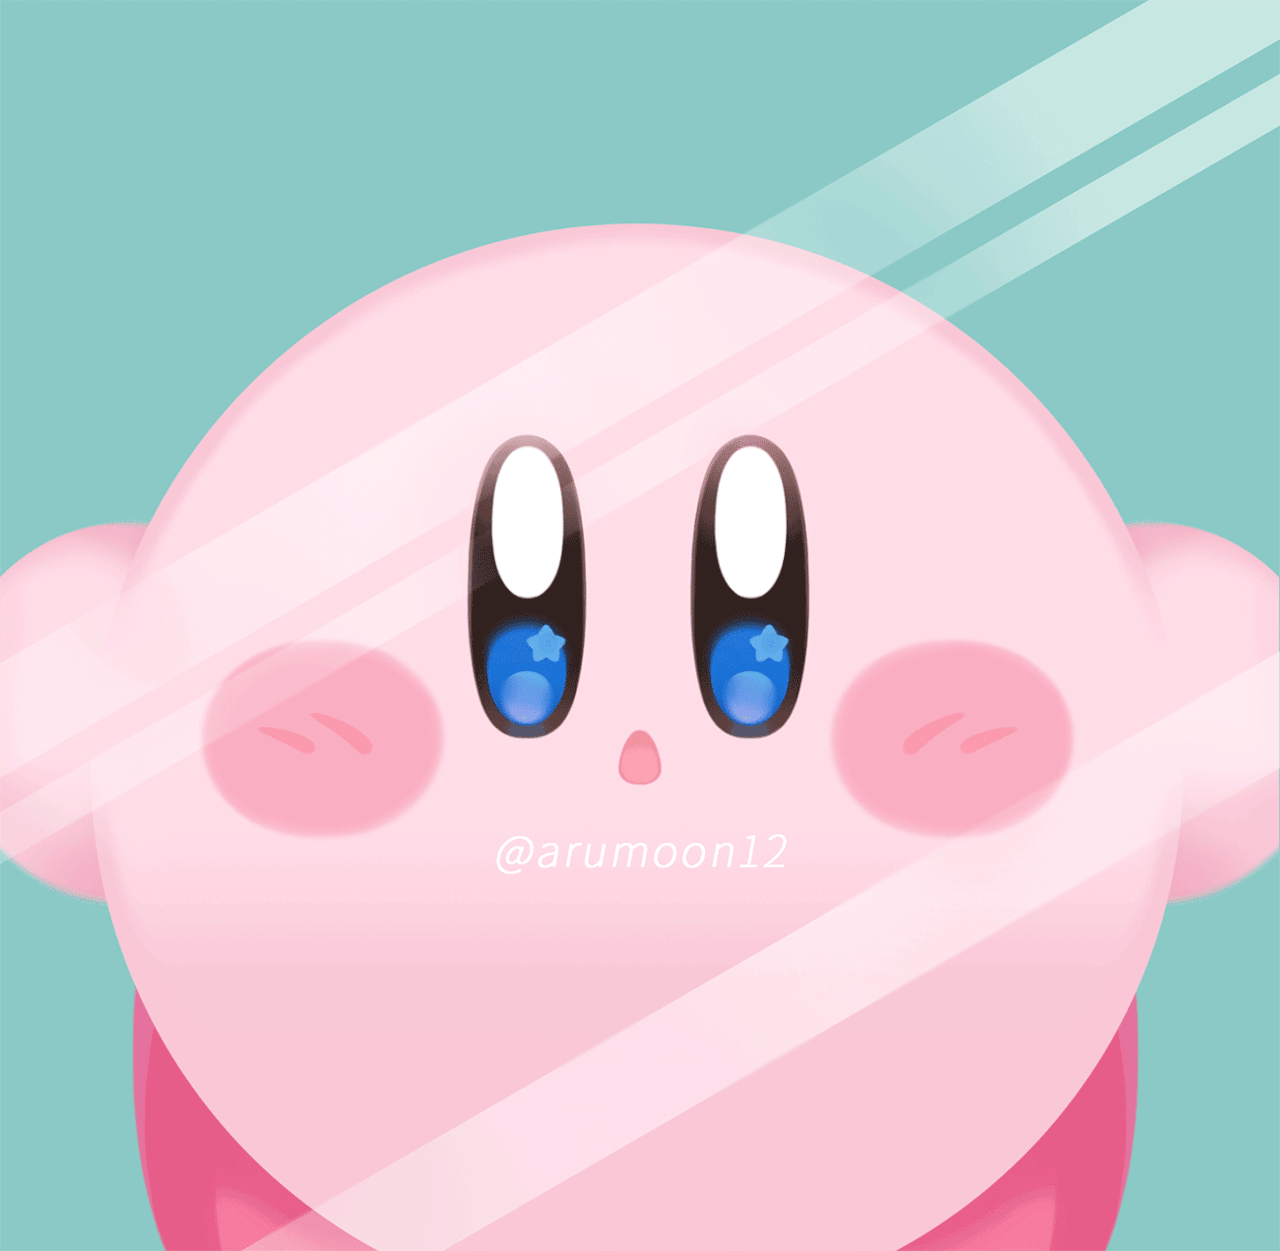 gorb (good orb) — arumoon94: Full Kirby...